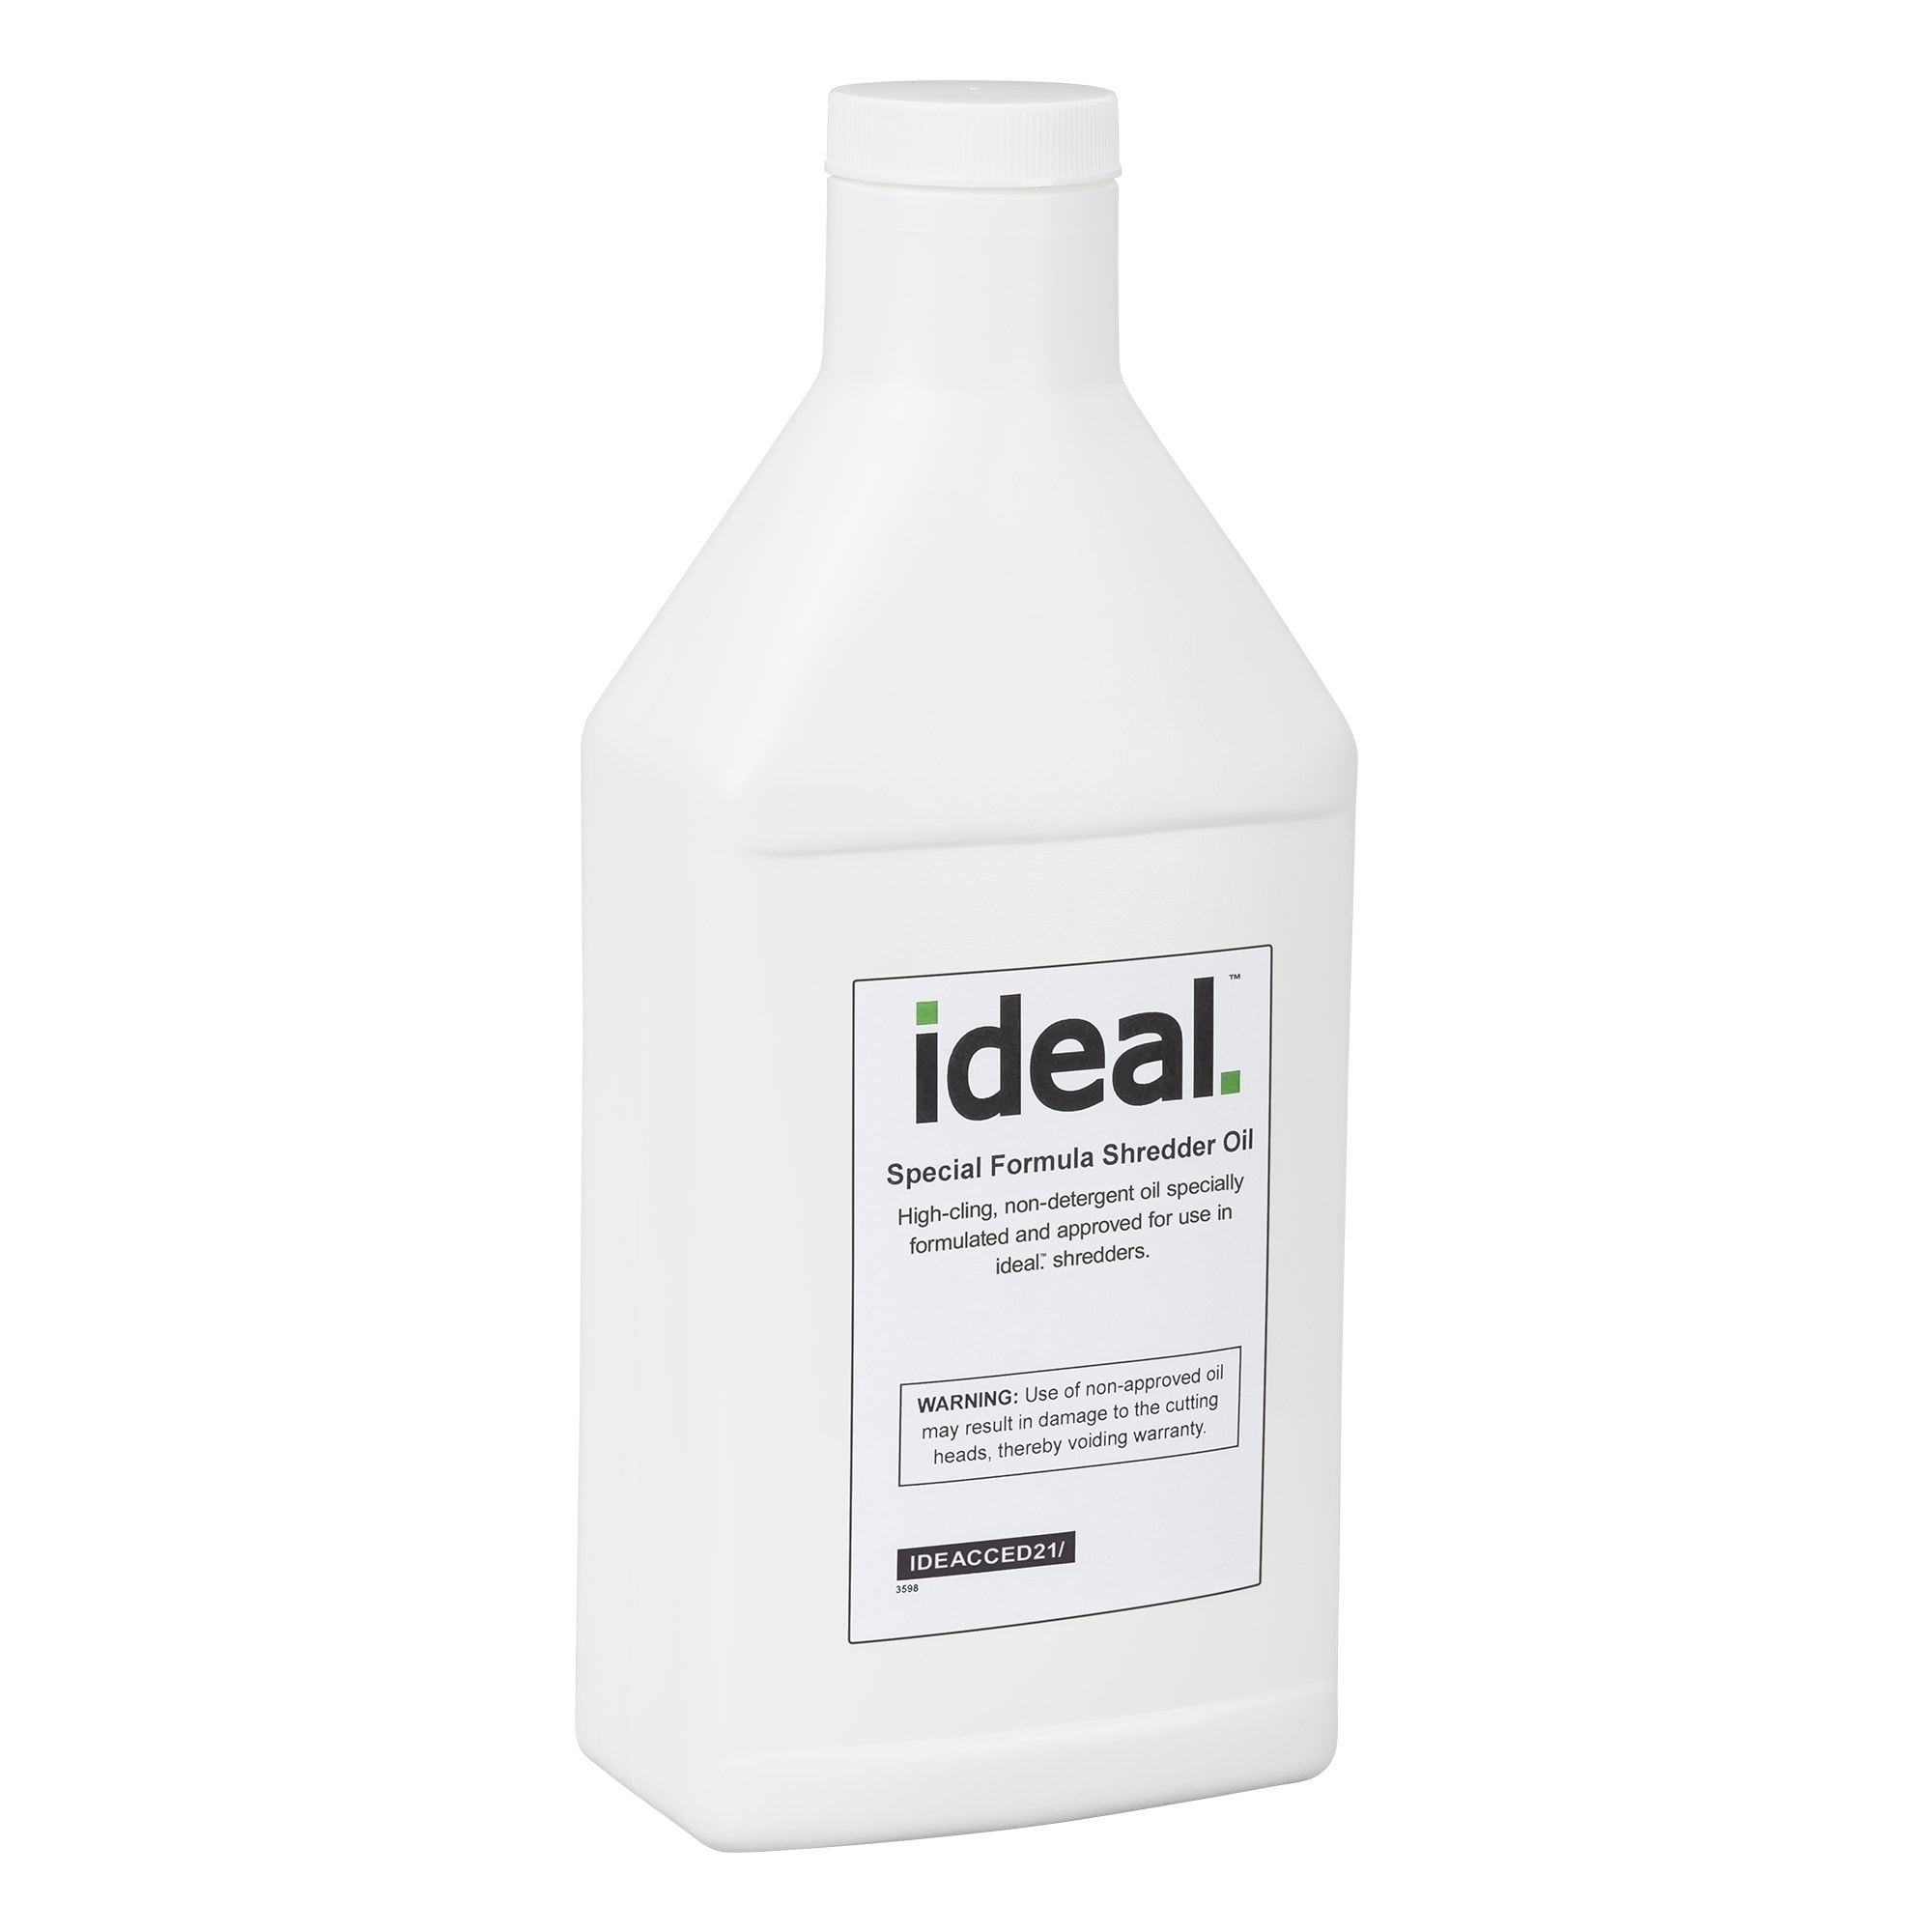 Special High-Cling Lubrication Oil for ideal. Shredders, 6 Bottles, 1 Quart